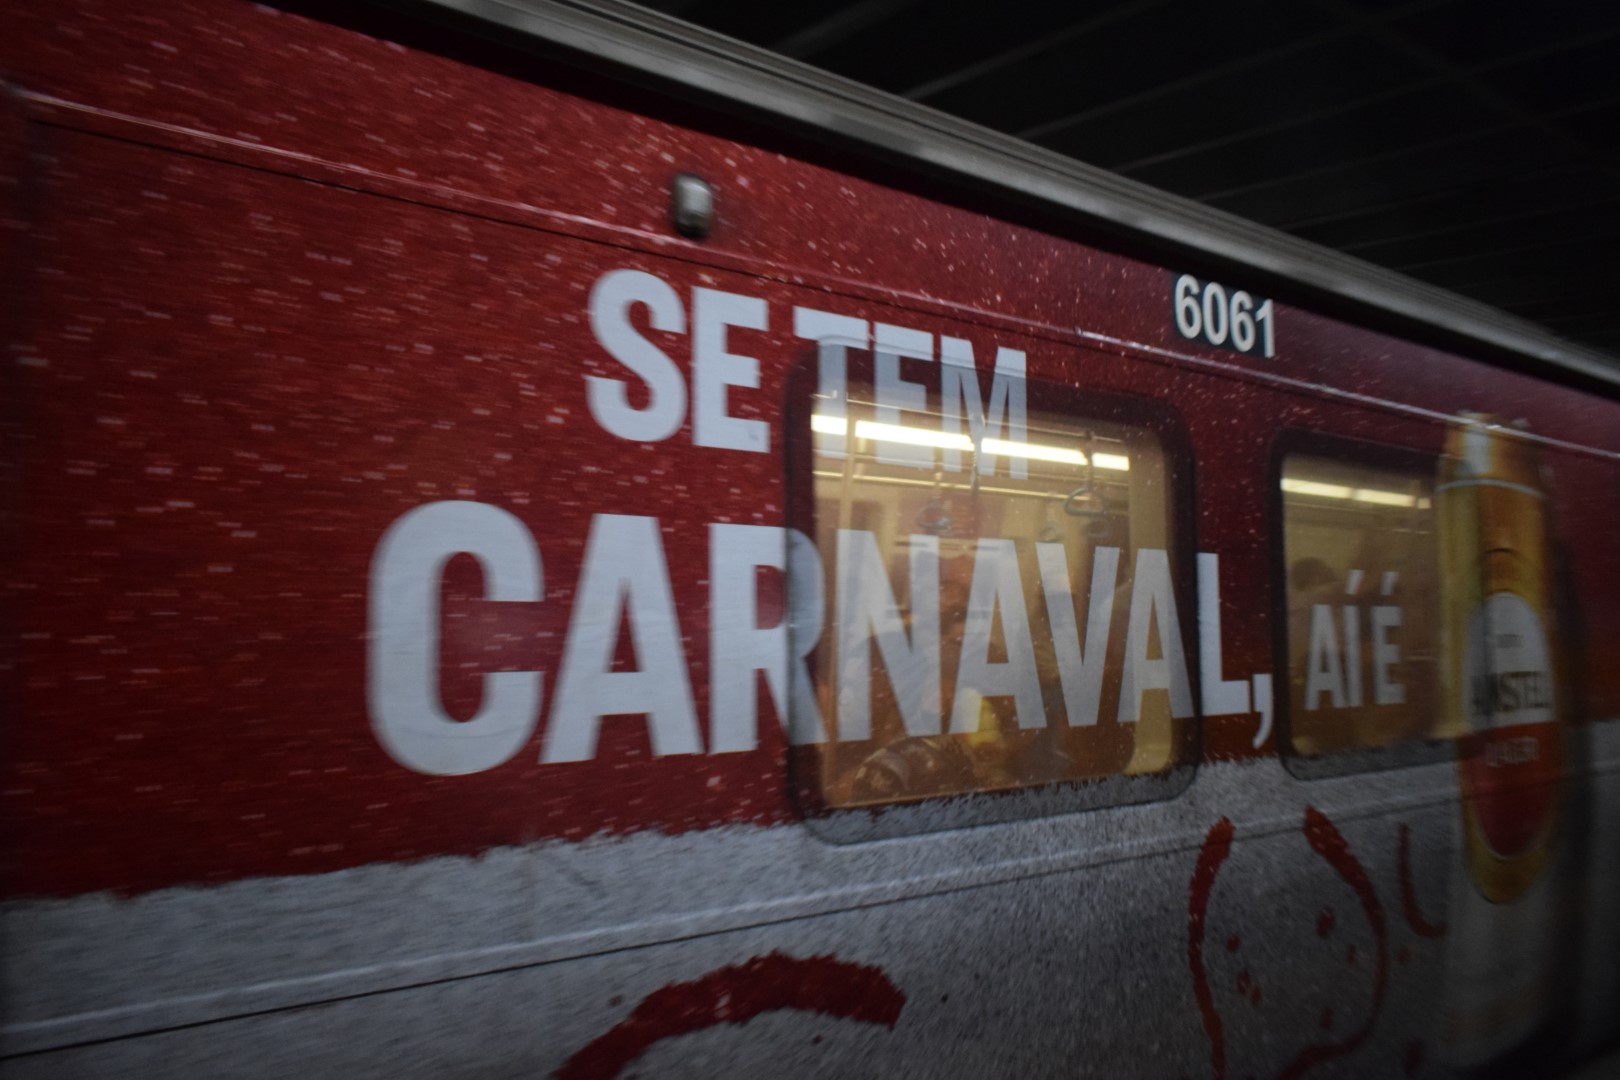 Subway from Flamengo to Copacabana